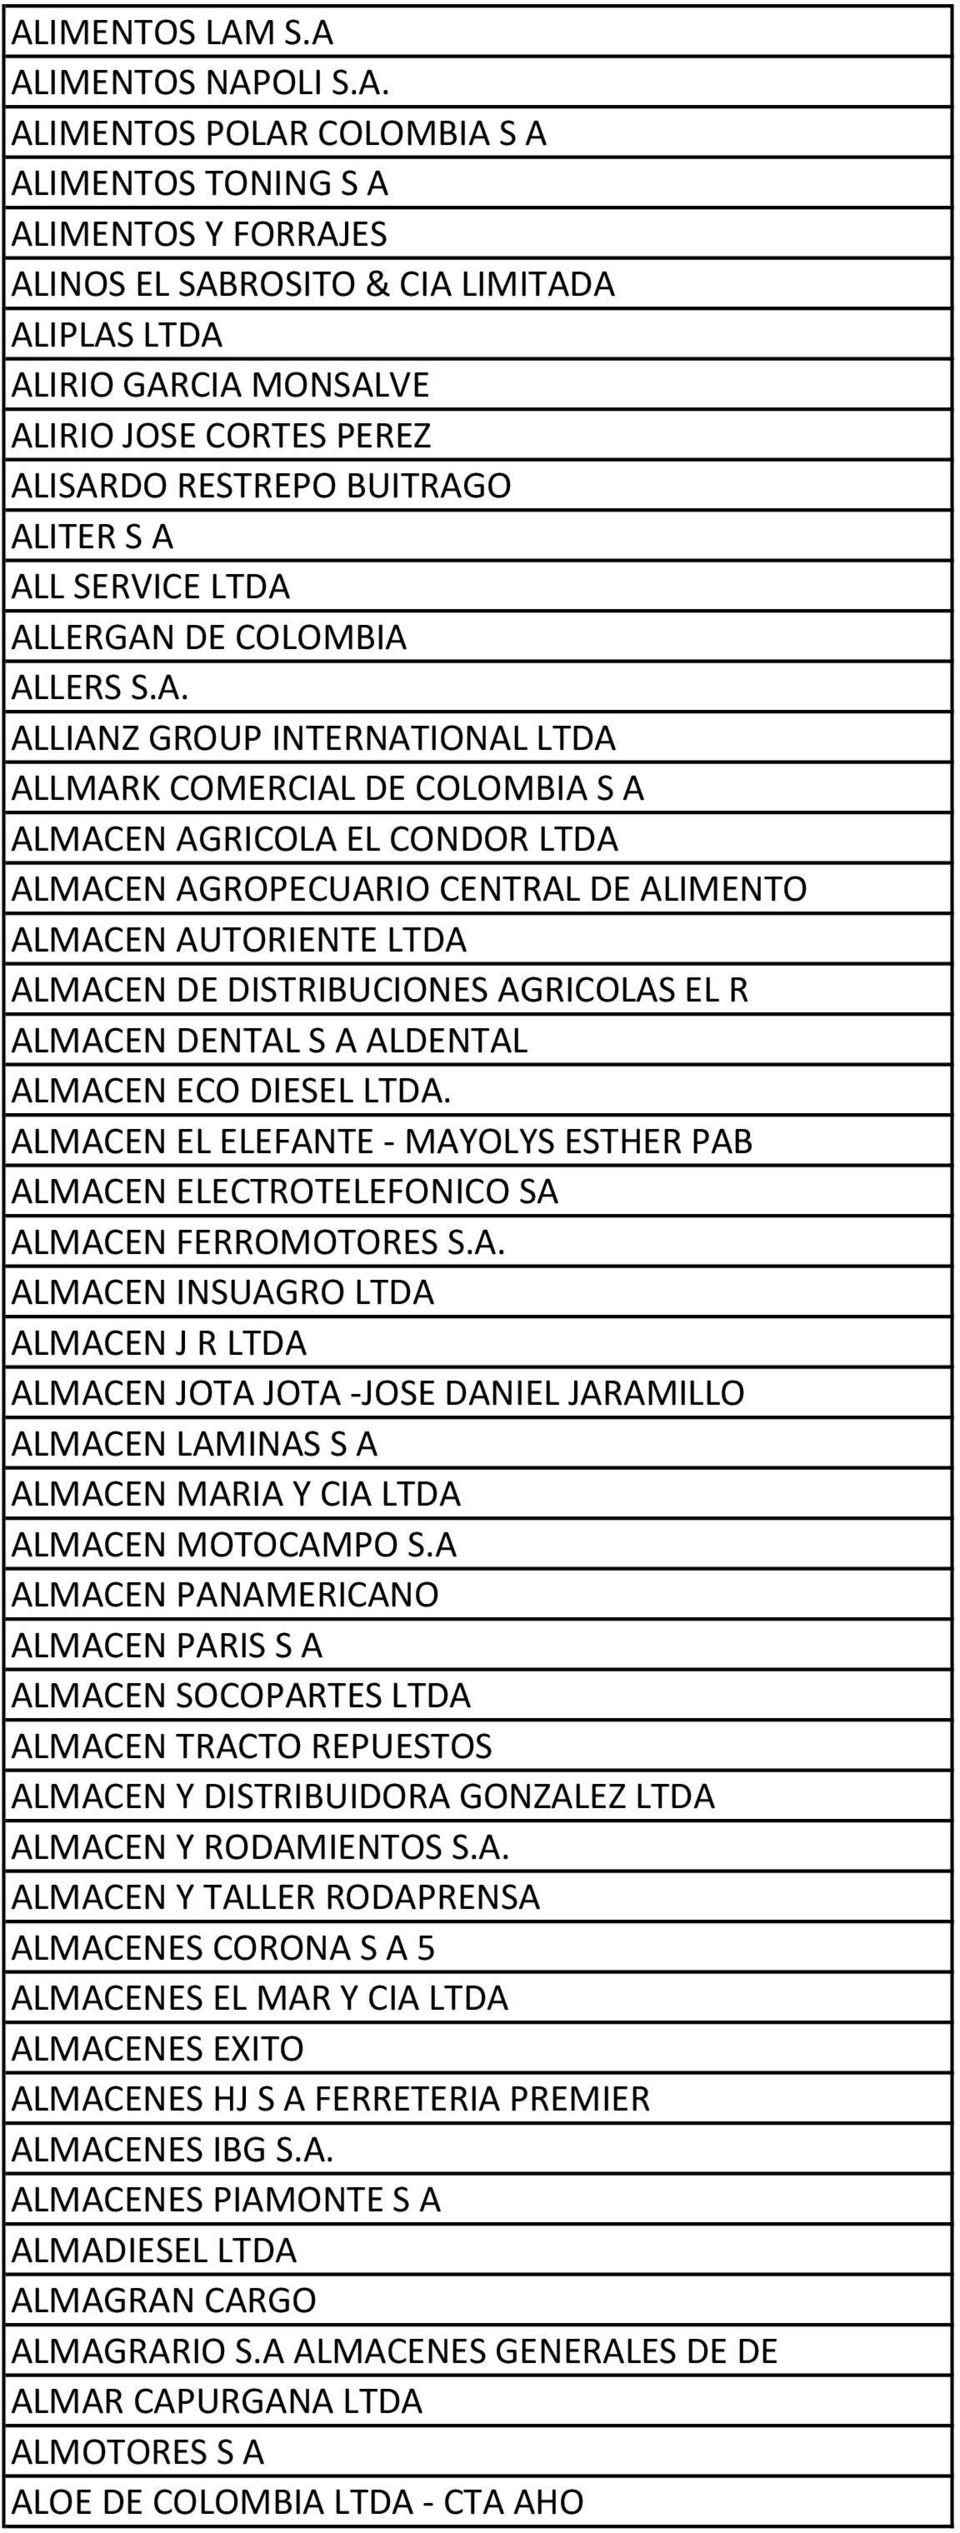 ISARDO RESTREPO BUITRAGO ALITER S A ALL SERVICE LTDA ALLERGAN DE COLOMBIA ALLERS S.A. ALLIANZ GROUP INTERNATIONAL LTDA ALLMARK COMERCIAL DE COLOMBIA S A ALMACEN AGRICOLA EL CONDOR LTDA ALMACEN